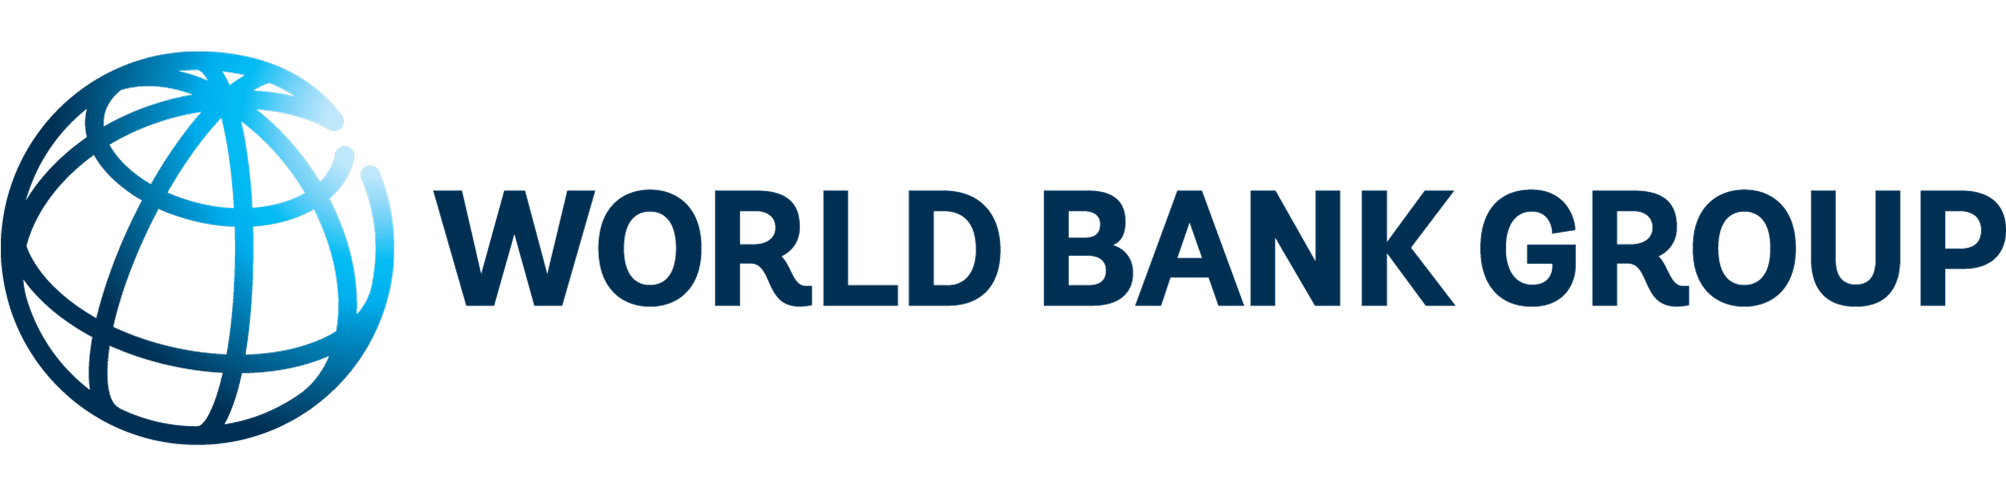 world bank group logo